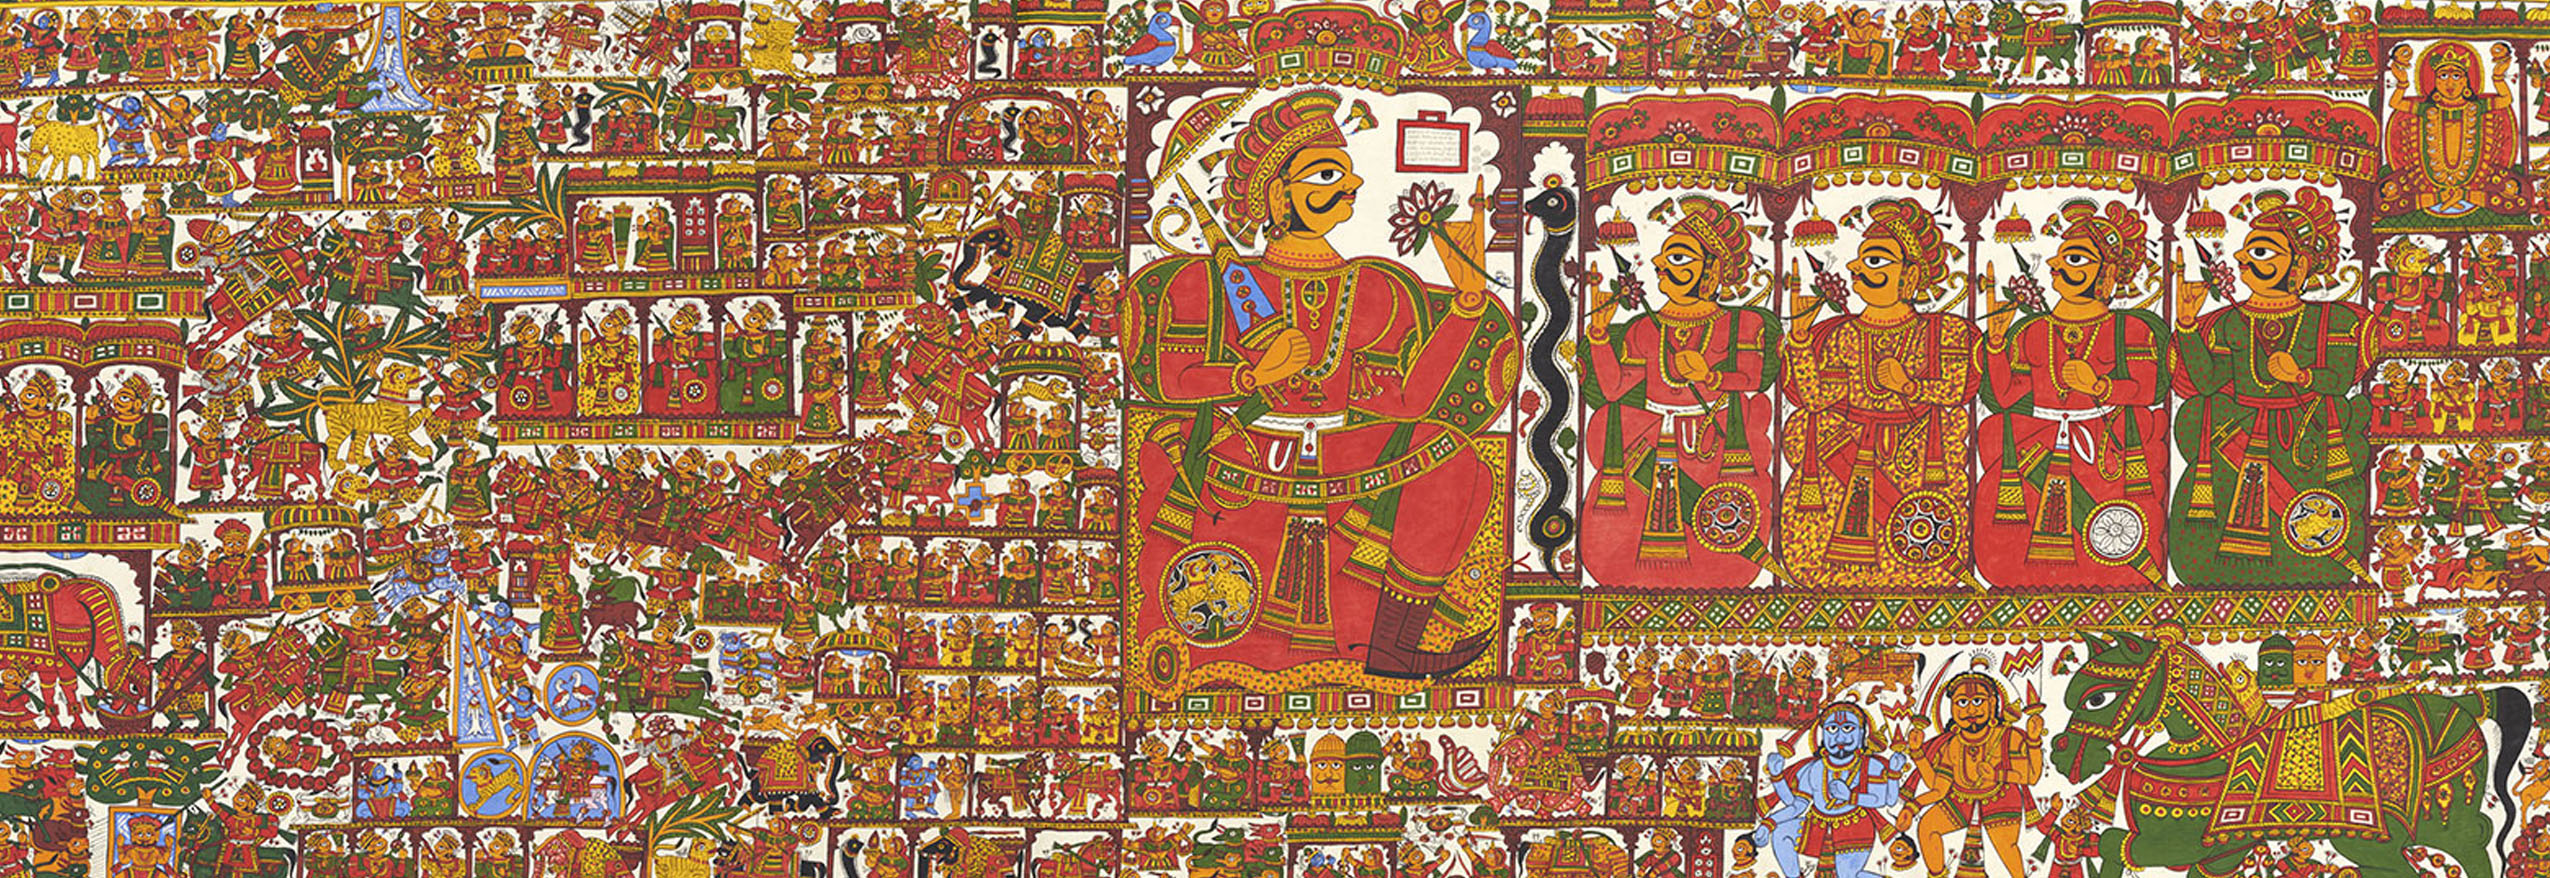 Large Art Chakra Angel Healing 40 x 50 Fleece Tapestry Balance Within Chaos 